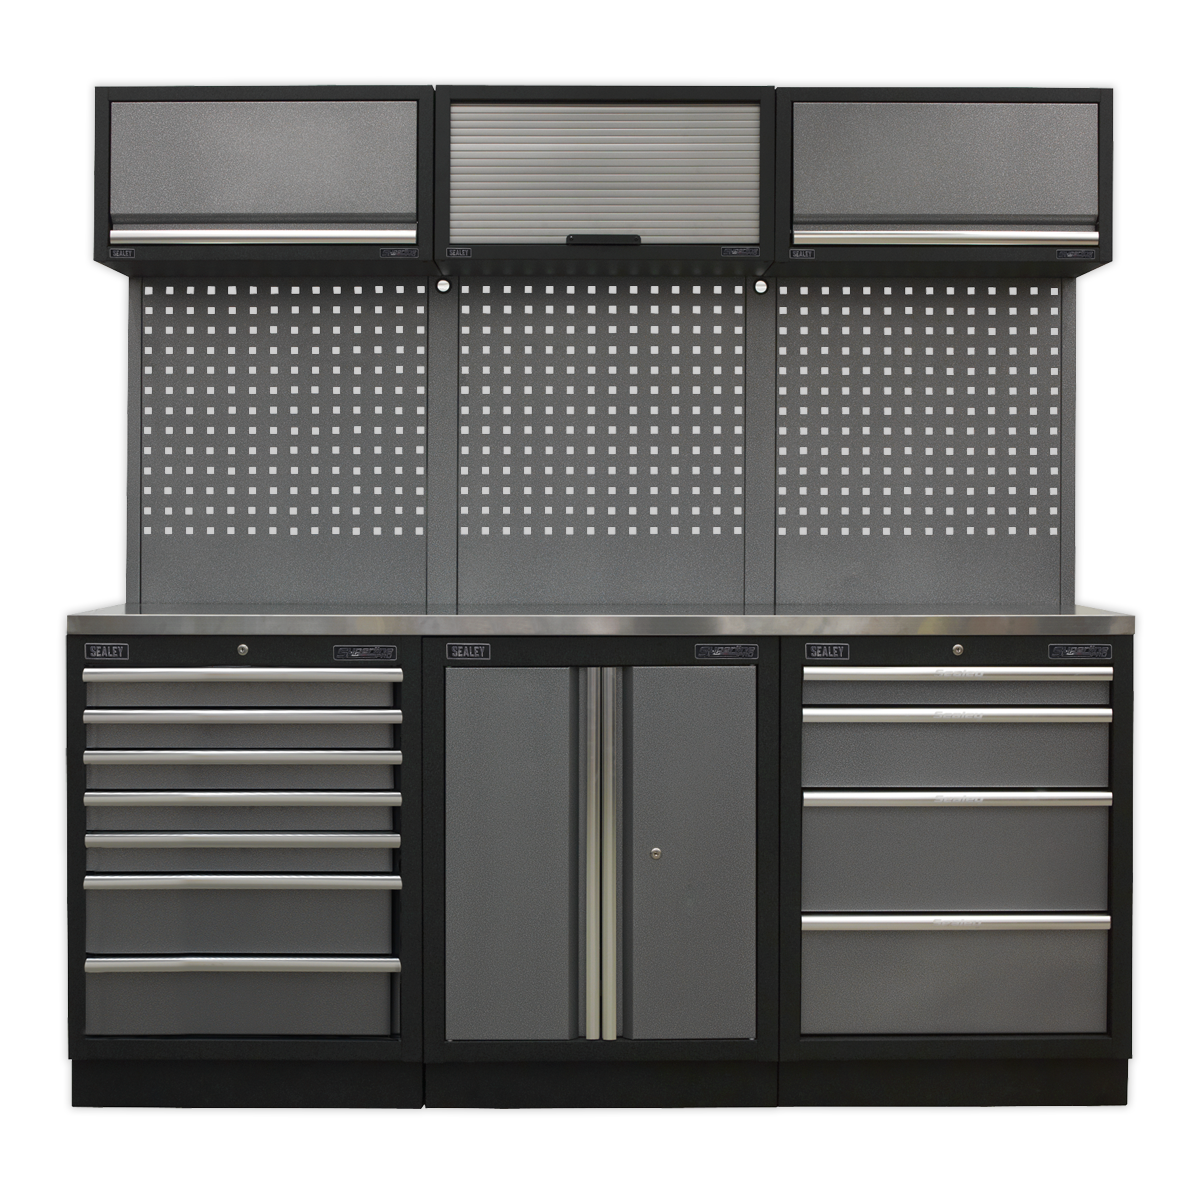 Sealey APMSSTACK07SS Superline PRO® 2m Storage System - Stainless Worktop